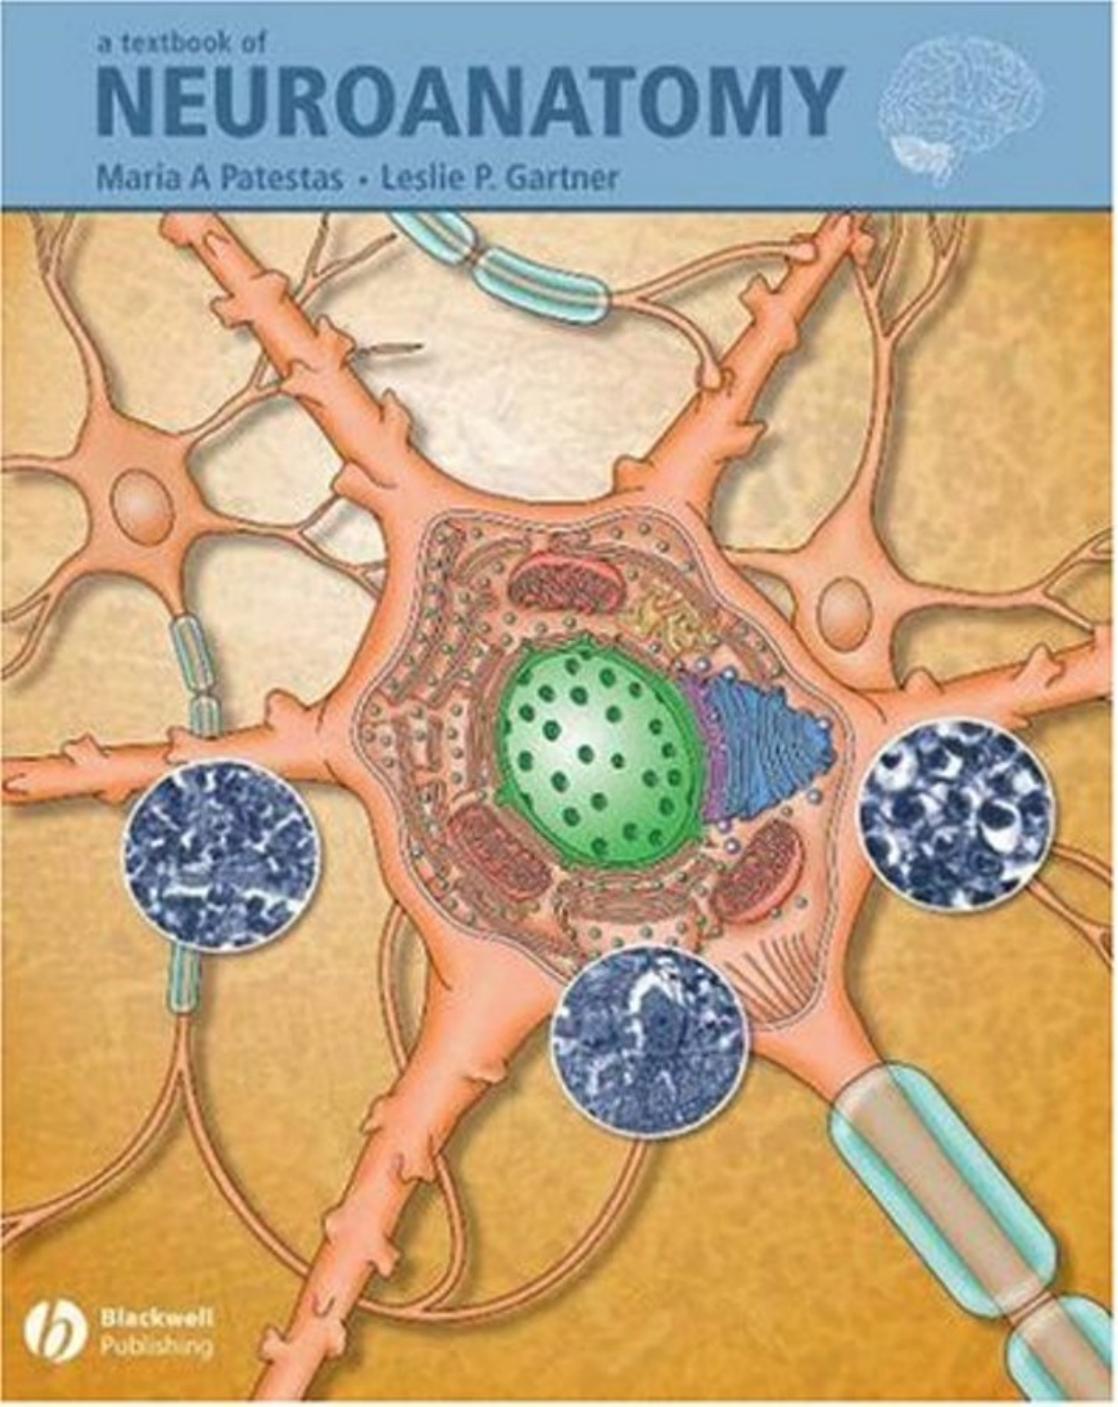 A Textbook of Neuroanatomy 2006